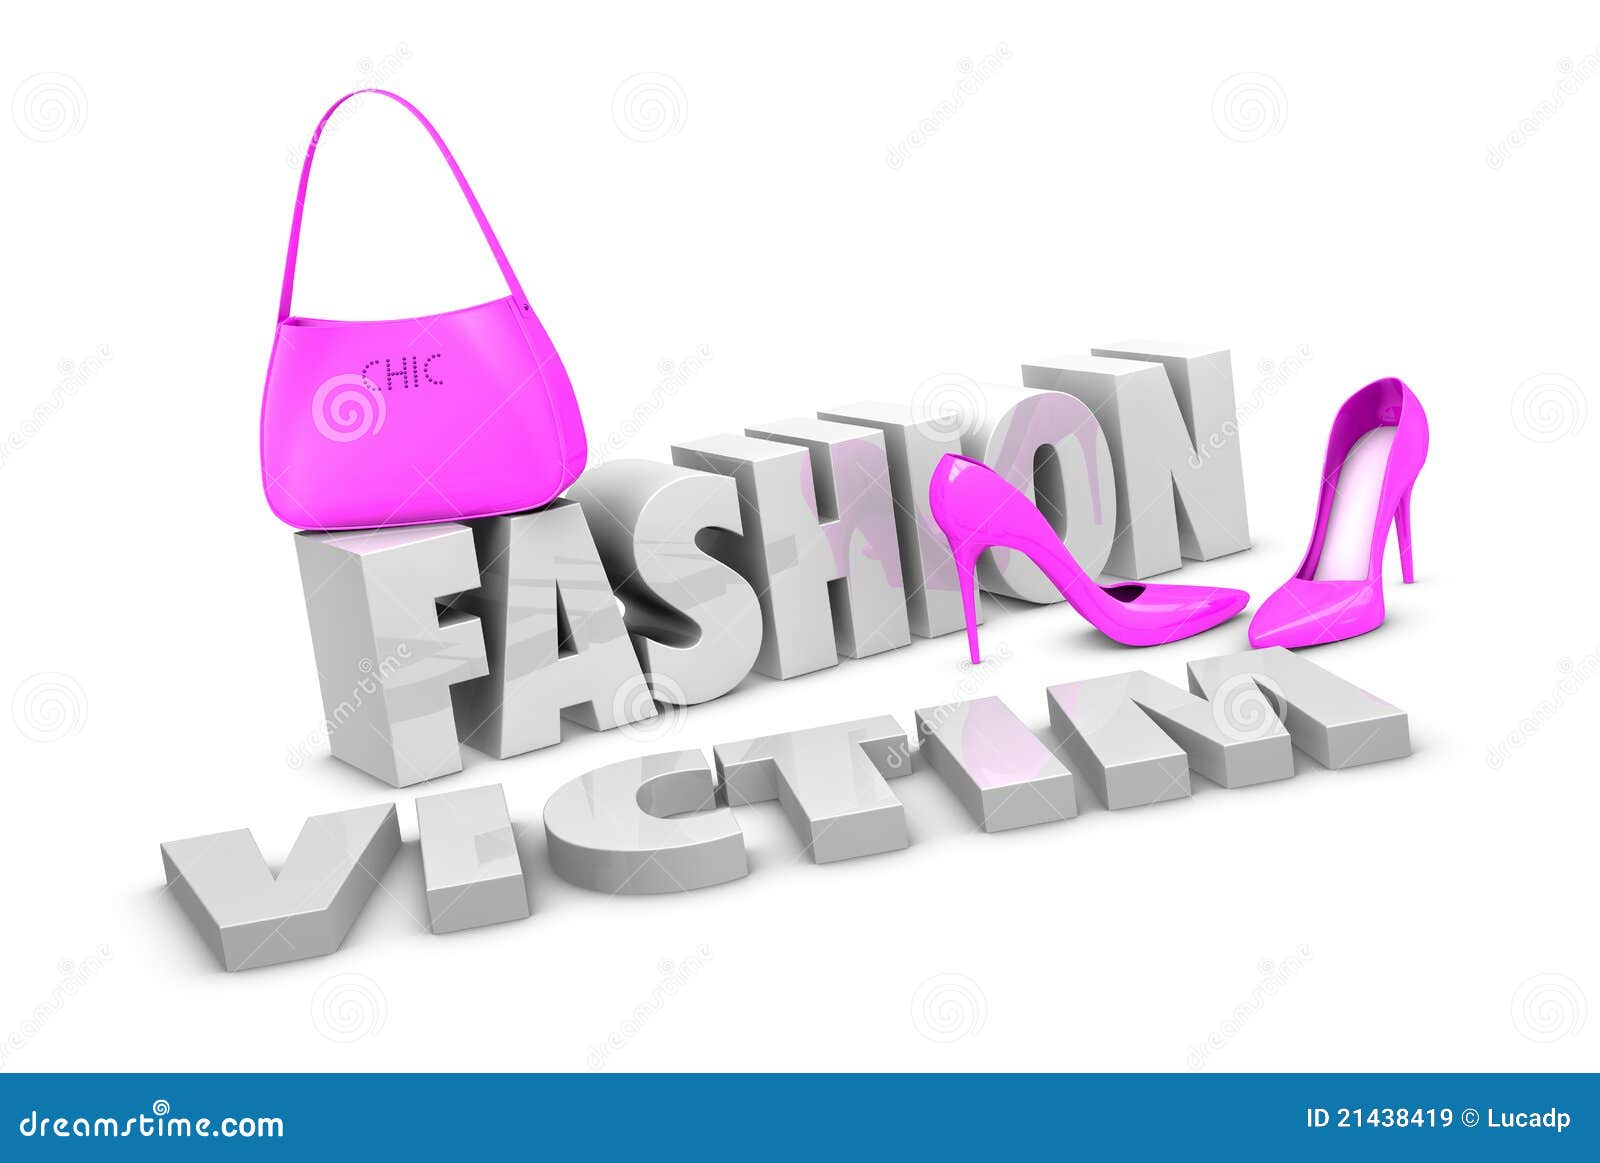 fashion victim concept